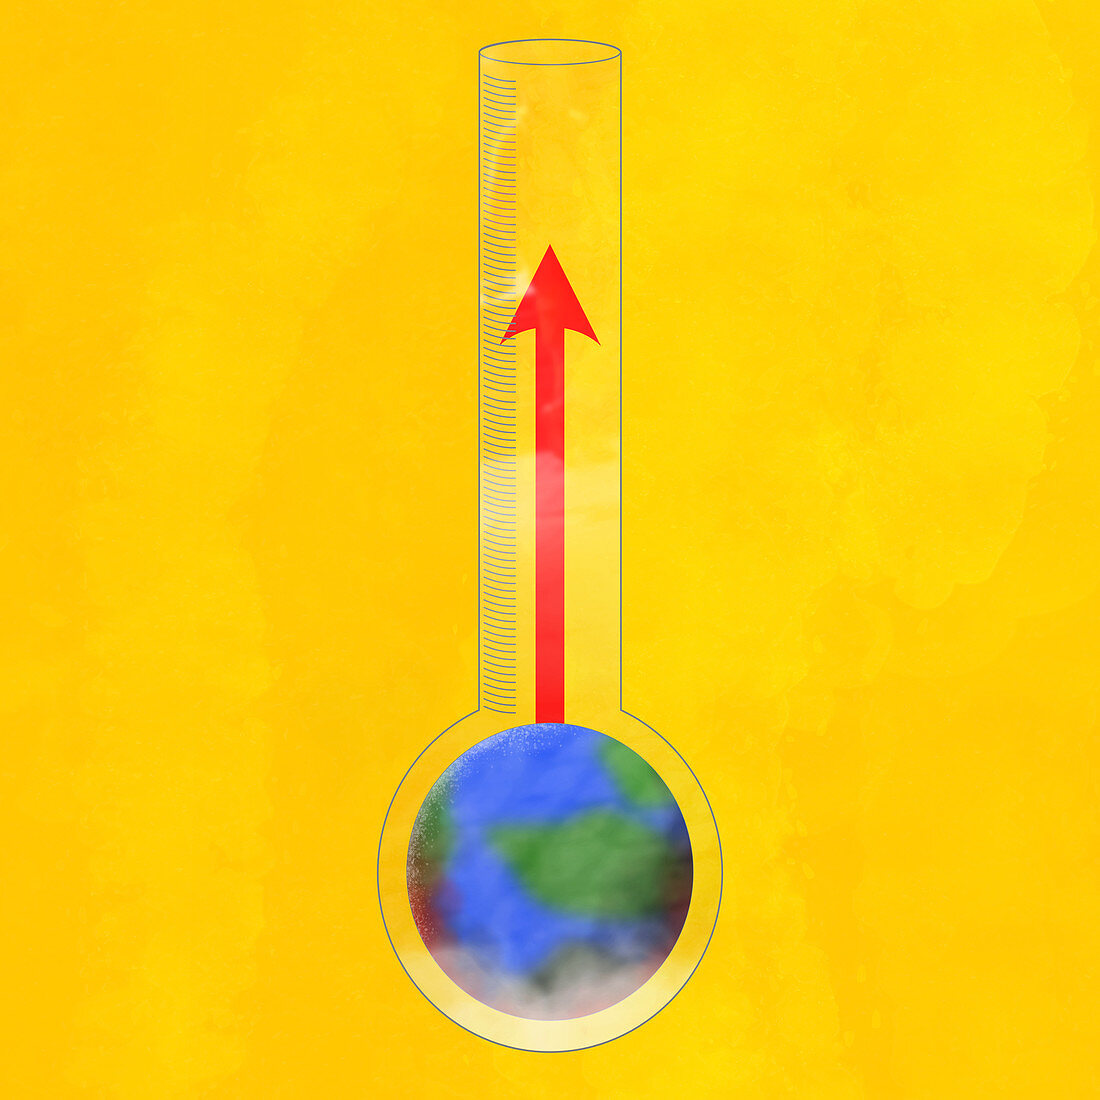 Temperature rising in globe thermometer, illustration